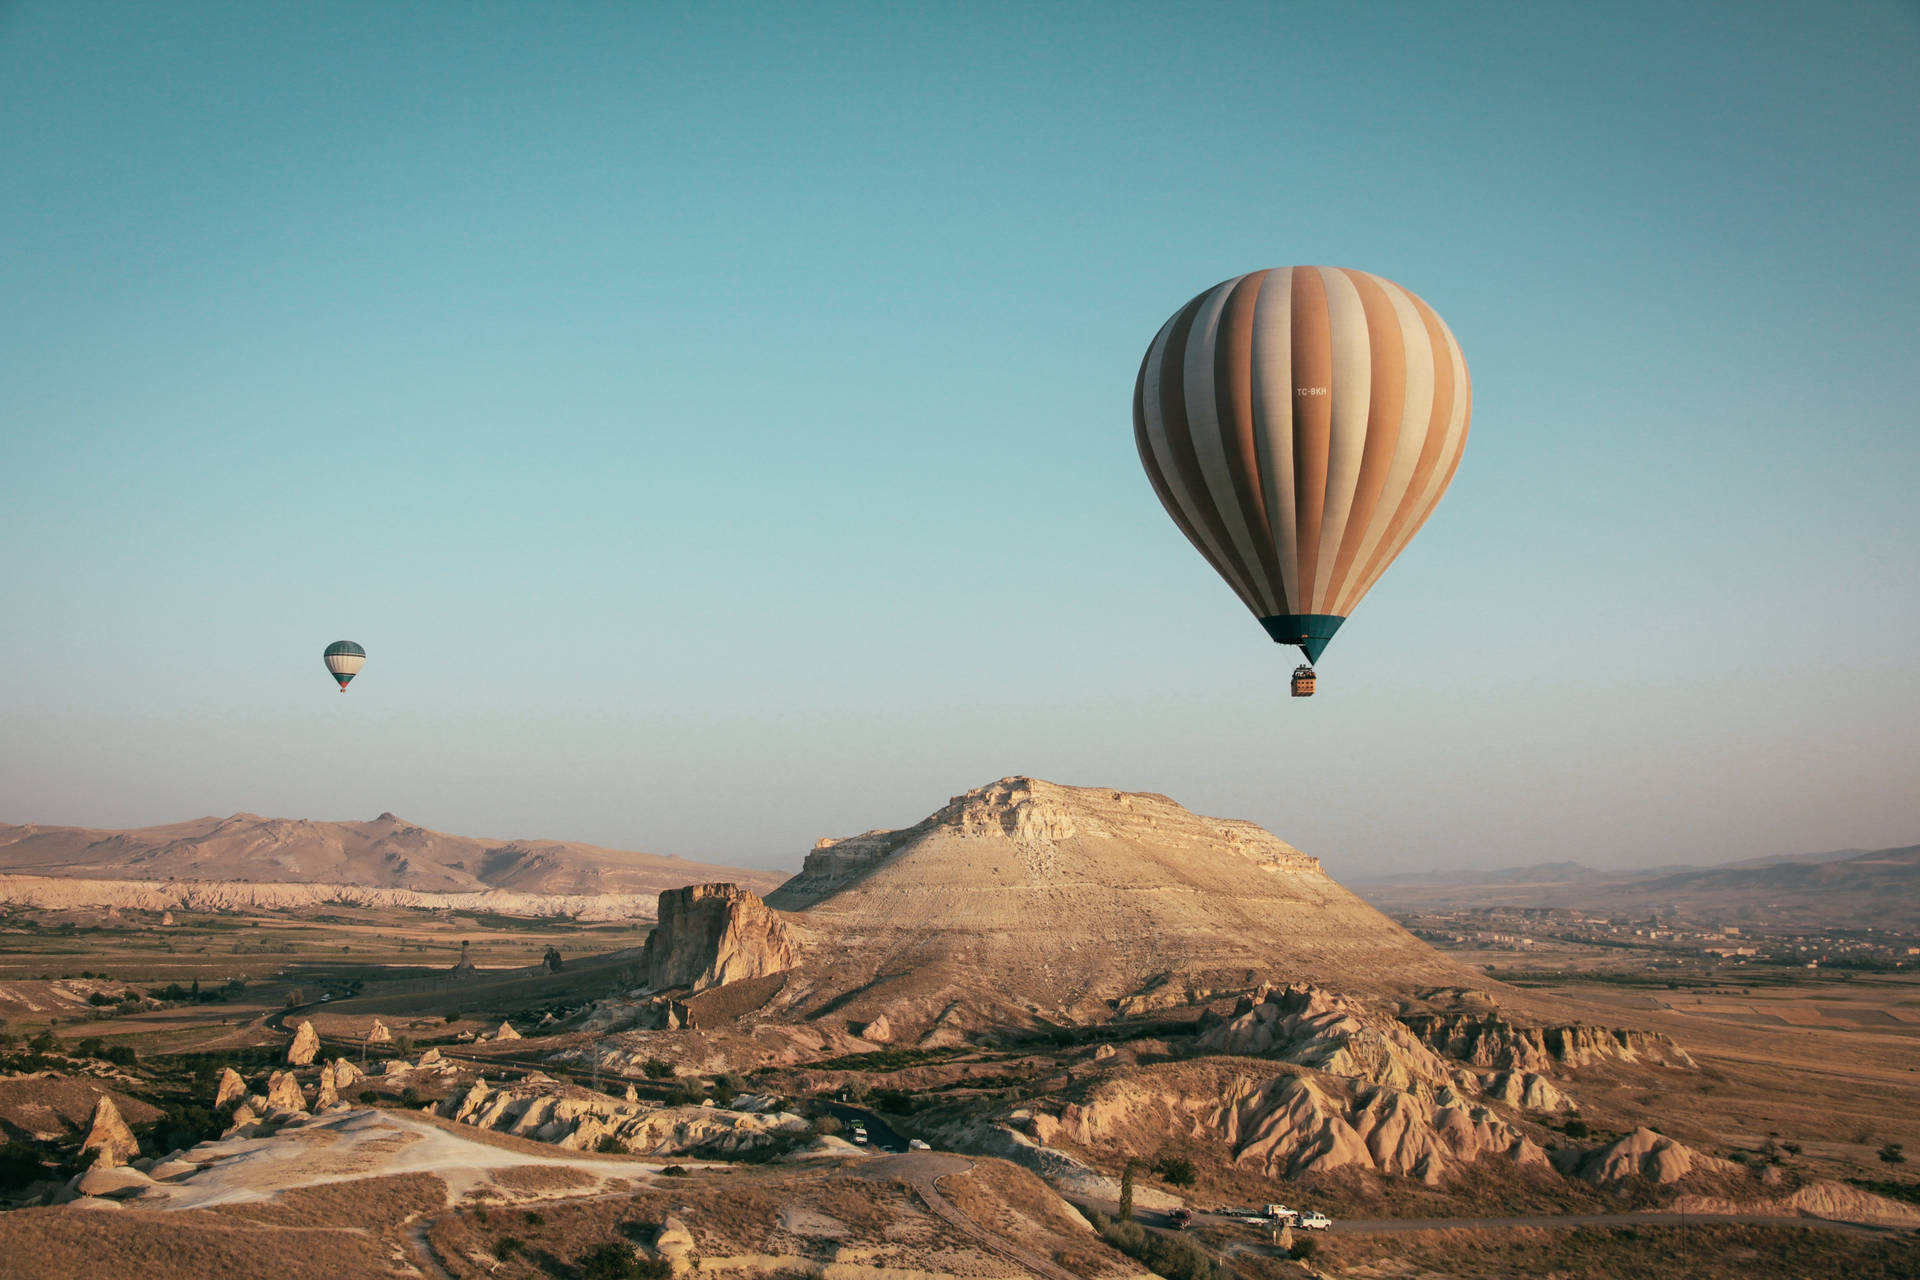 Cappadociaballons In Der Nähe Des Hügels Wallpaper